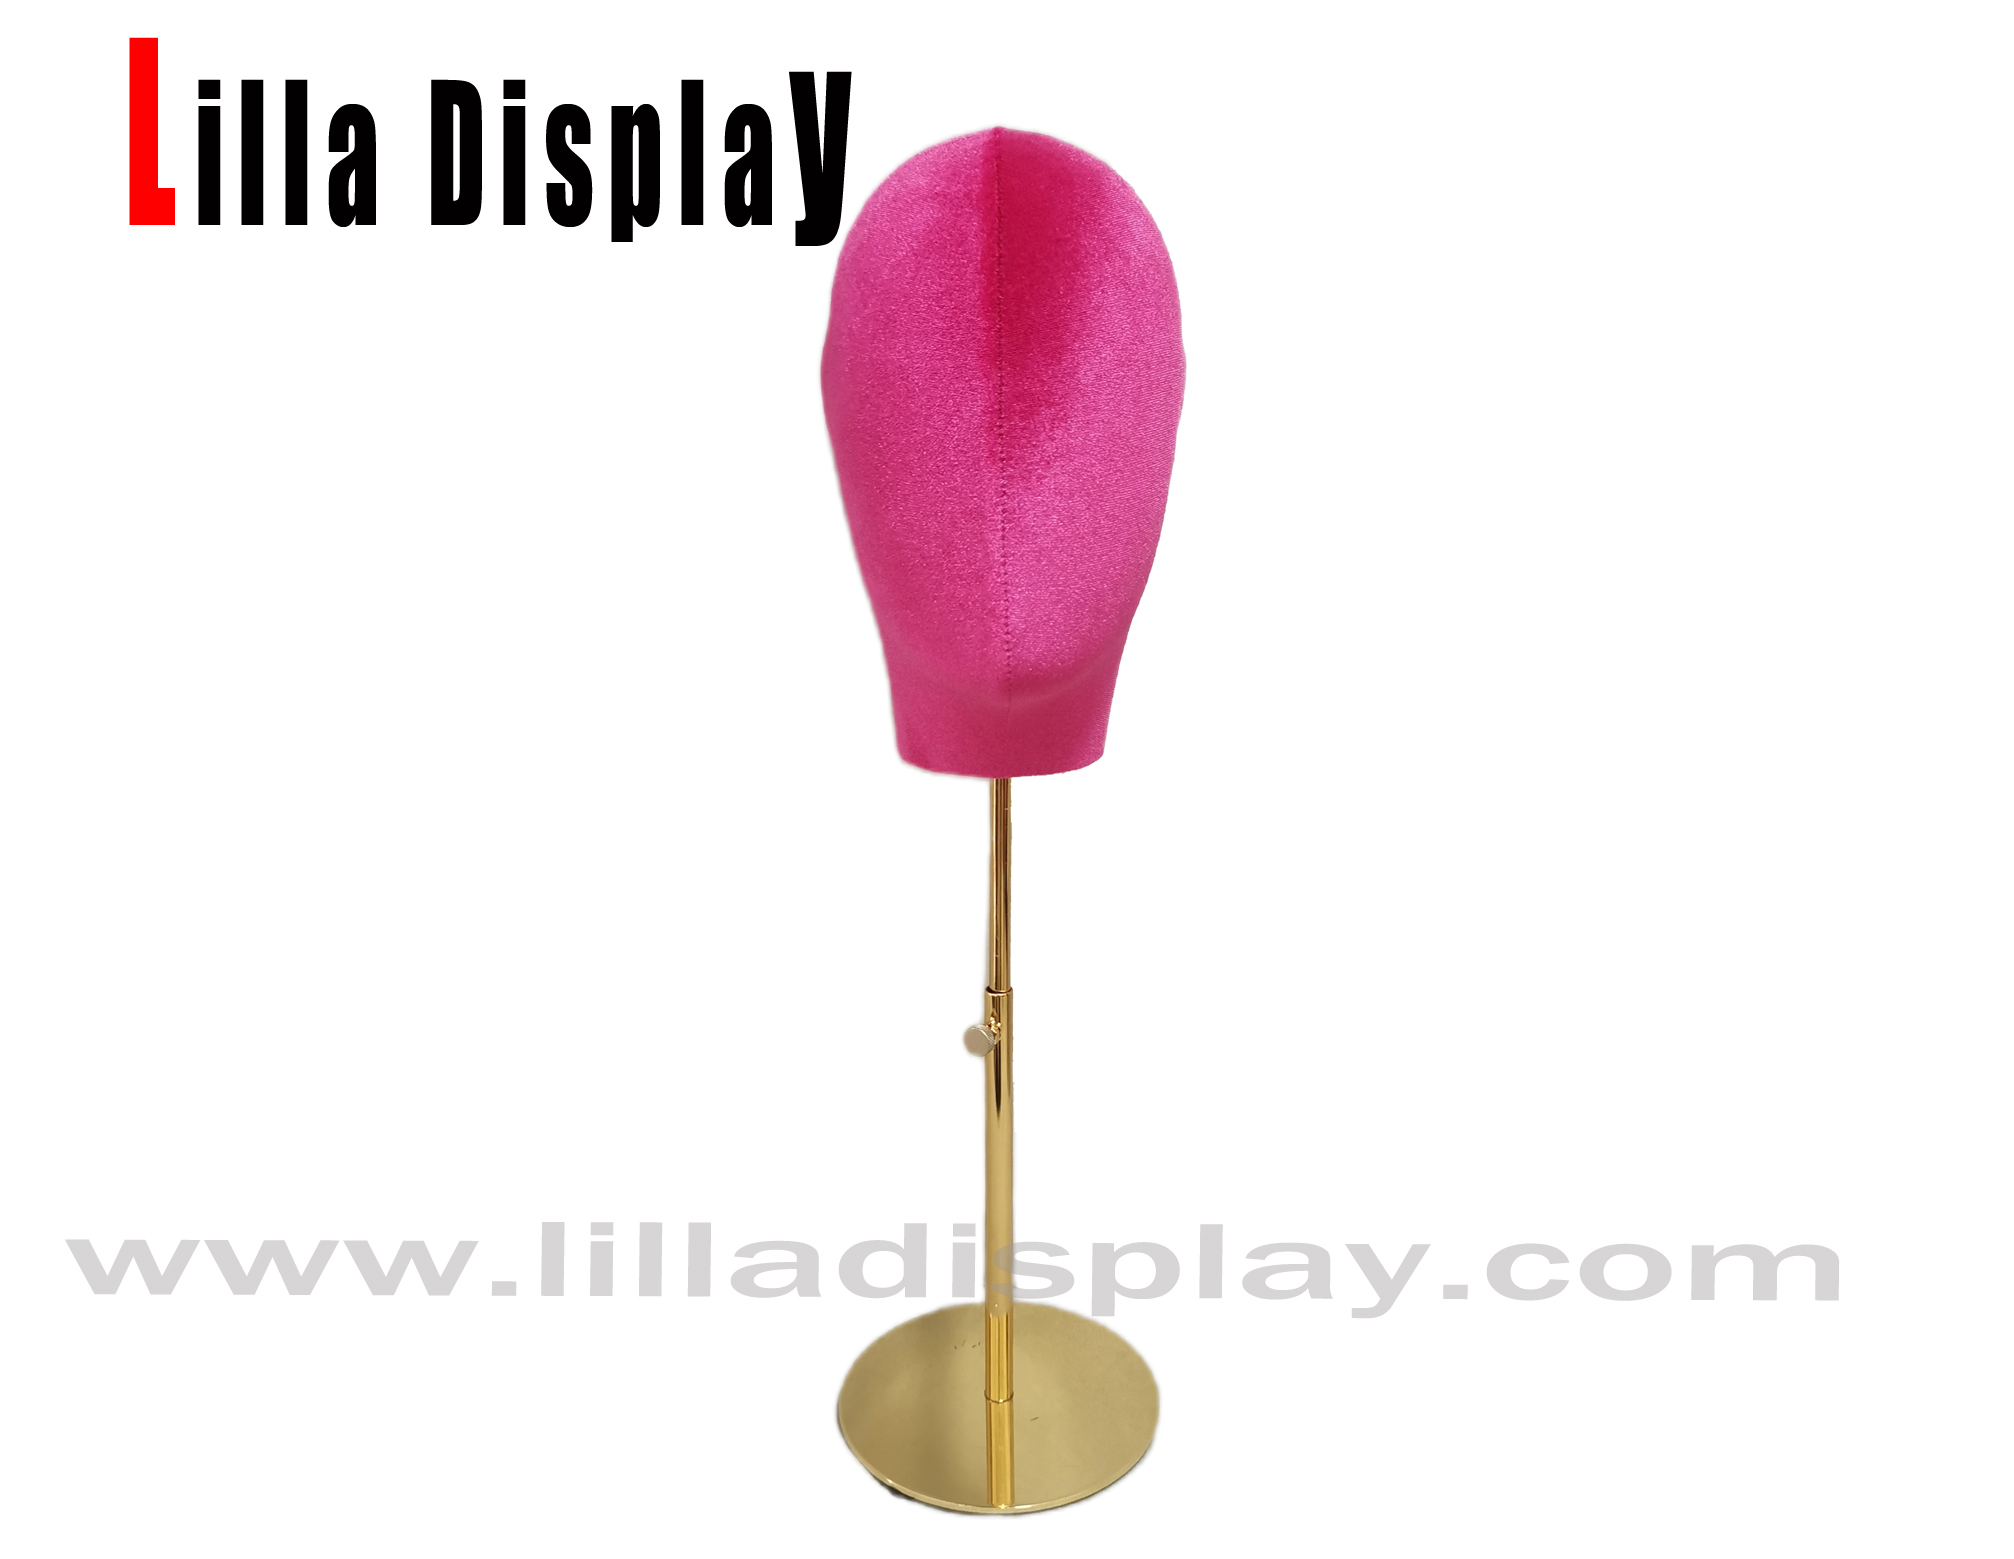 Cabeza de maniquí de mujer Lucy de terciopelo rosa con base dorada ajustable